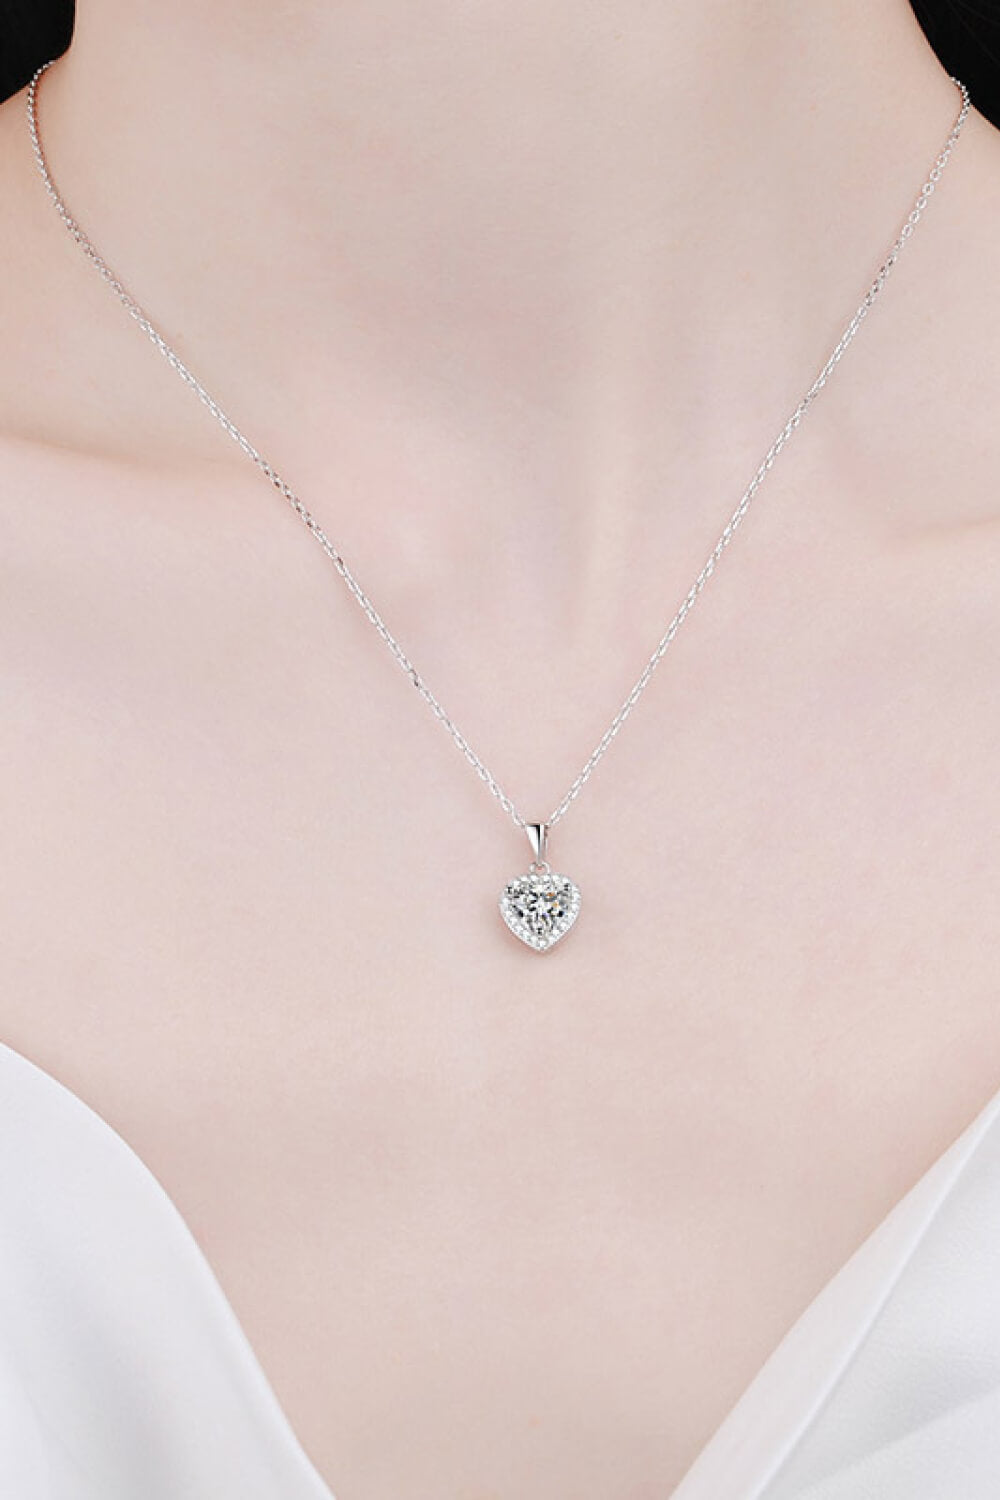 1 Carat Moissanite Heart Pendant Chain Necklace - Dash Trend